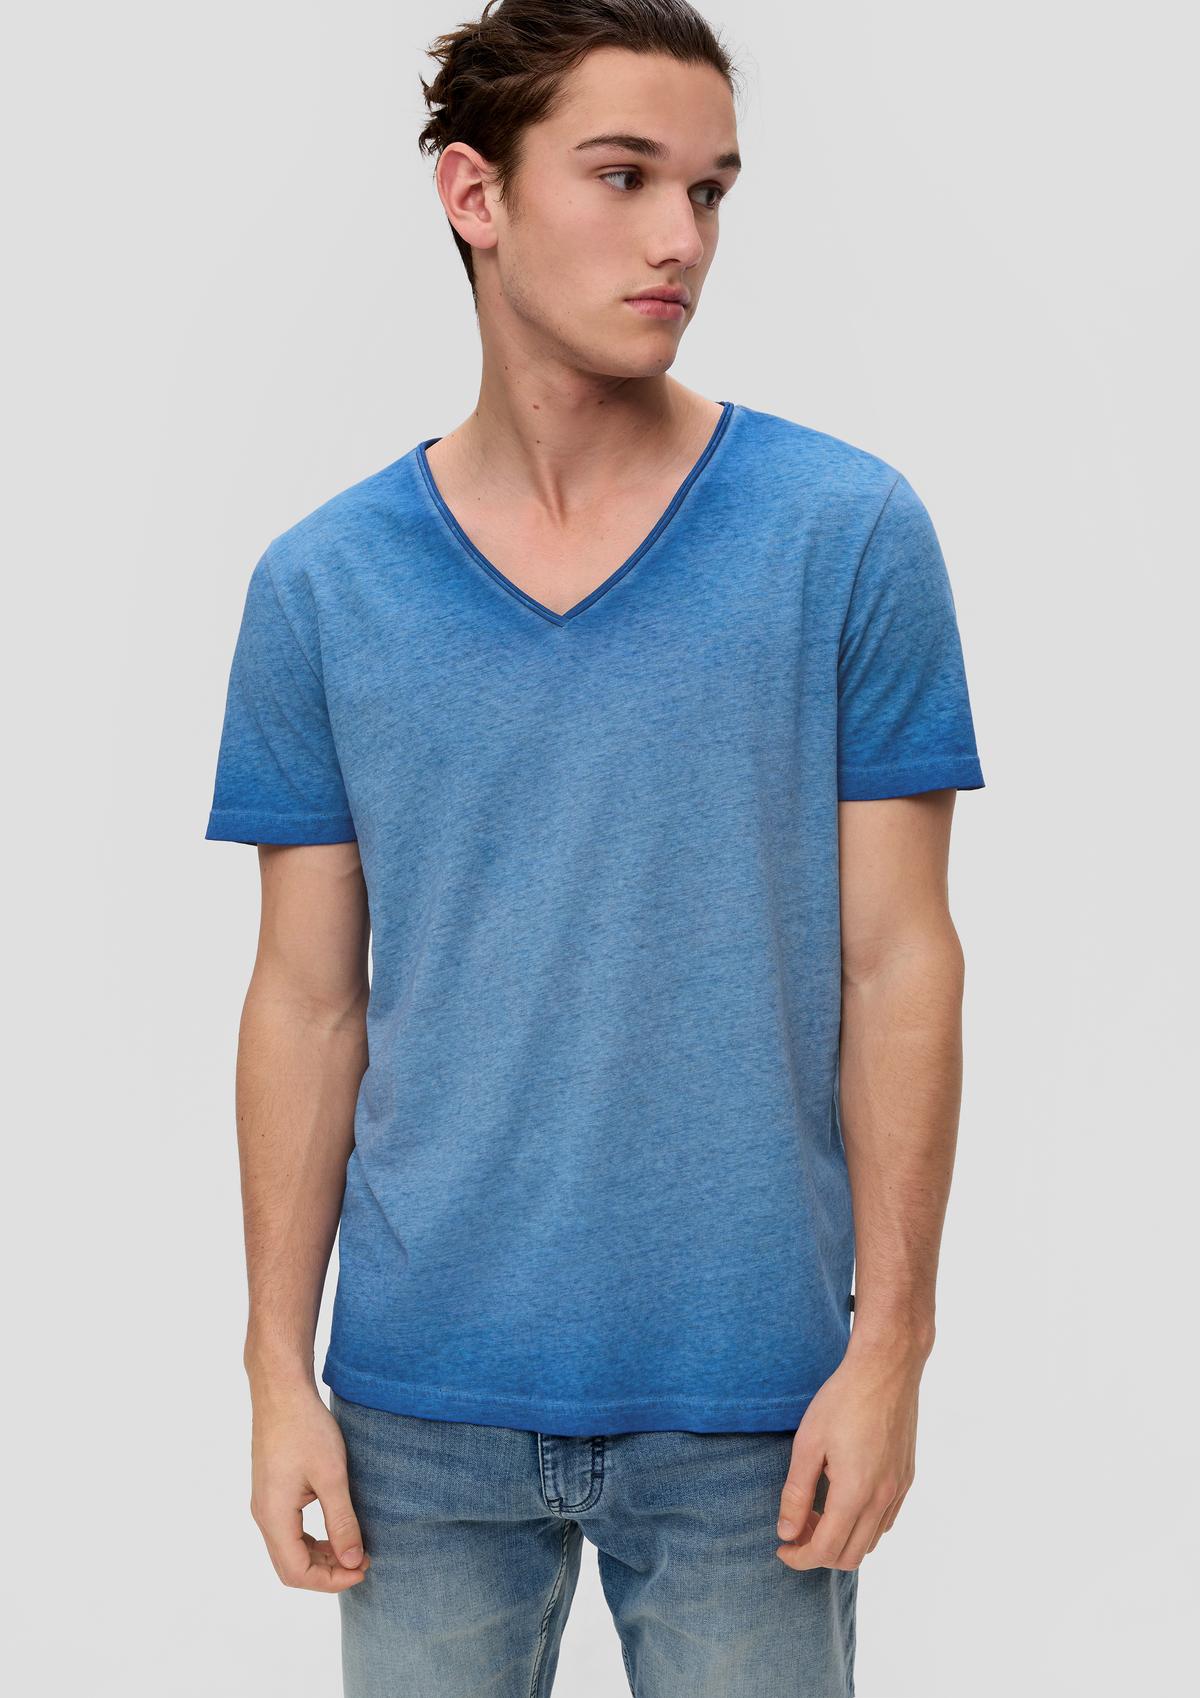 Melange cotton blend T-shirt